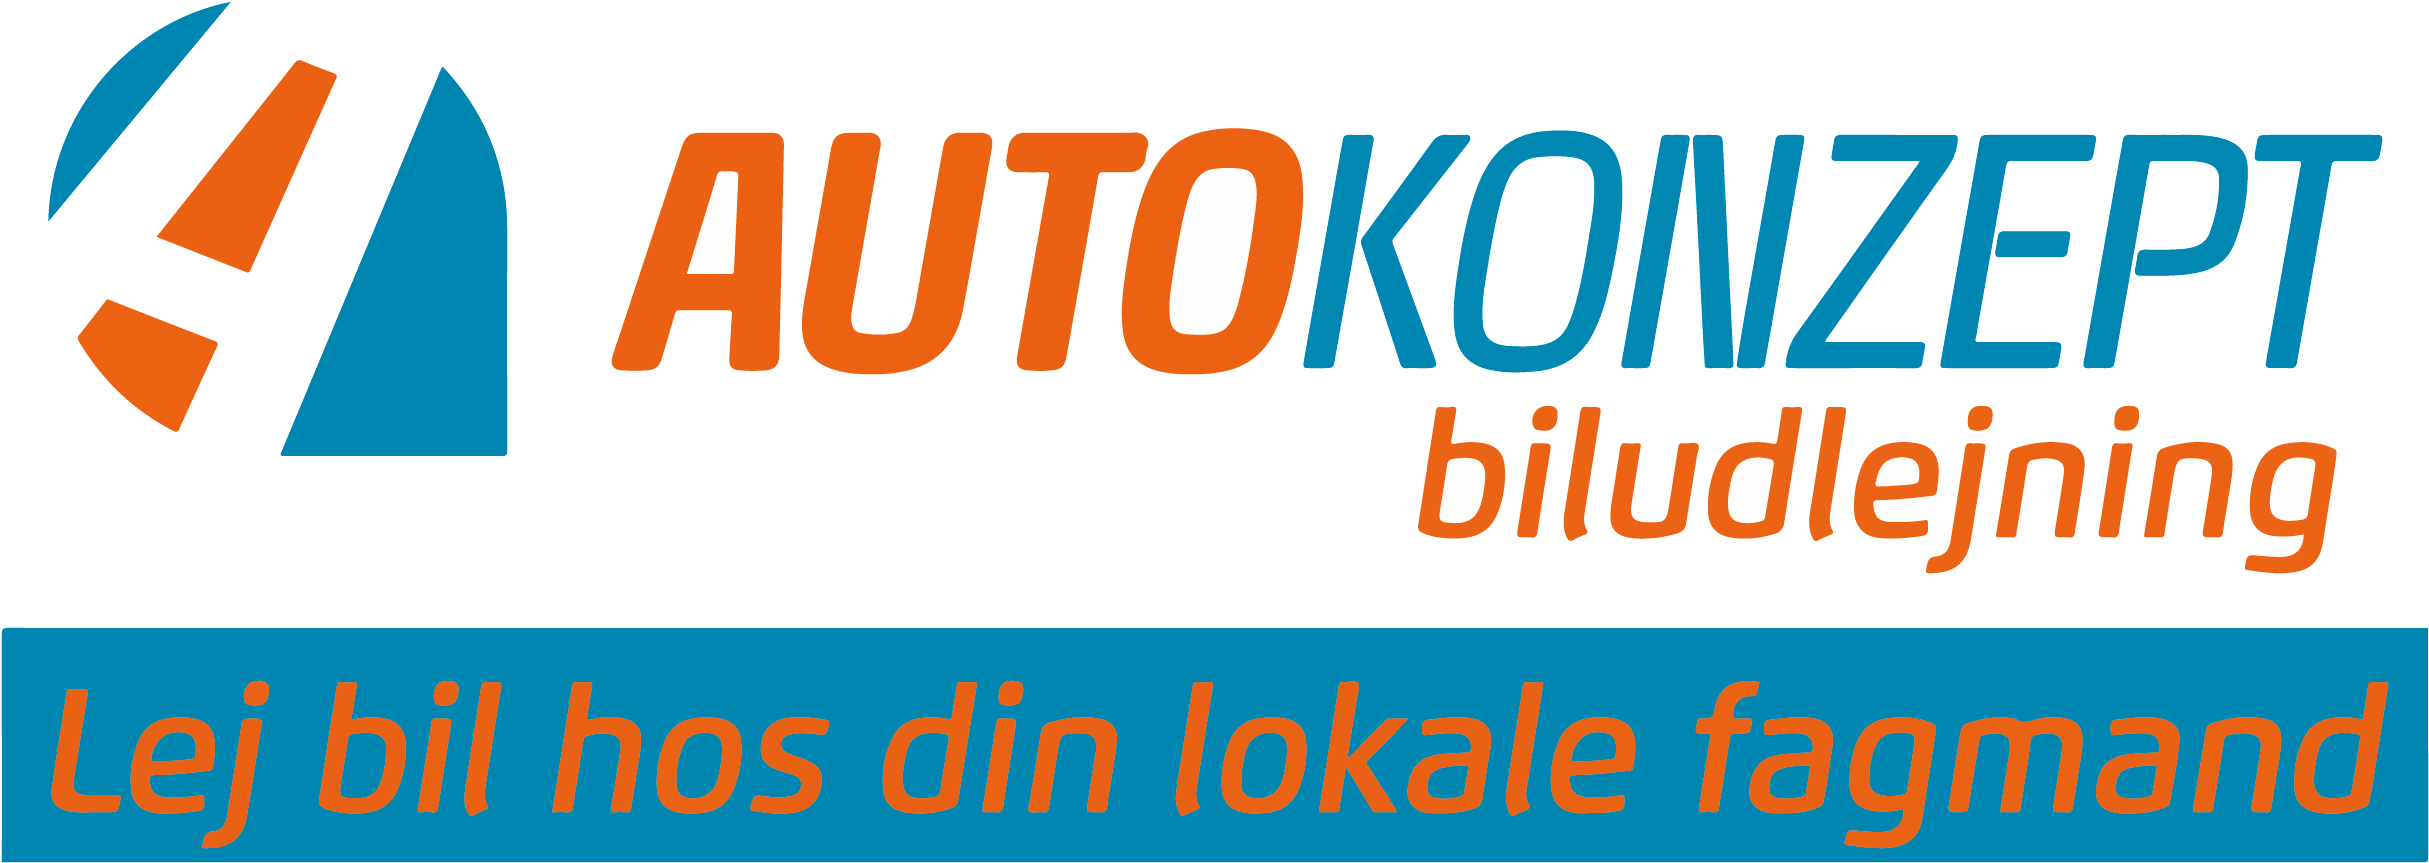 autokonzept_logo_biludlejning_cmyk.png